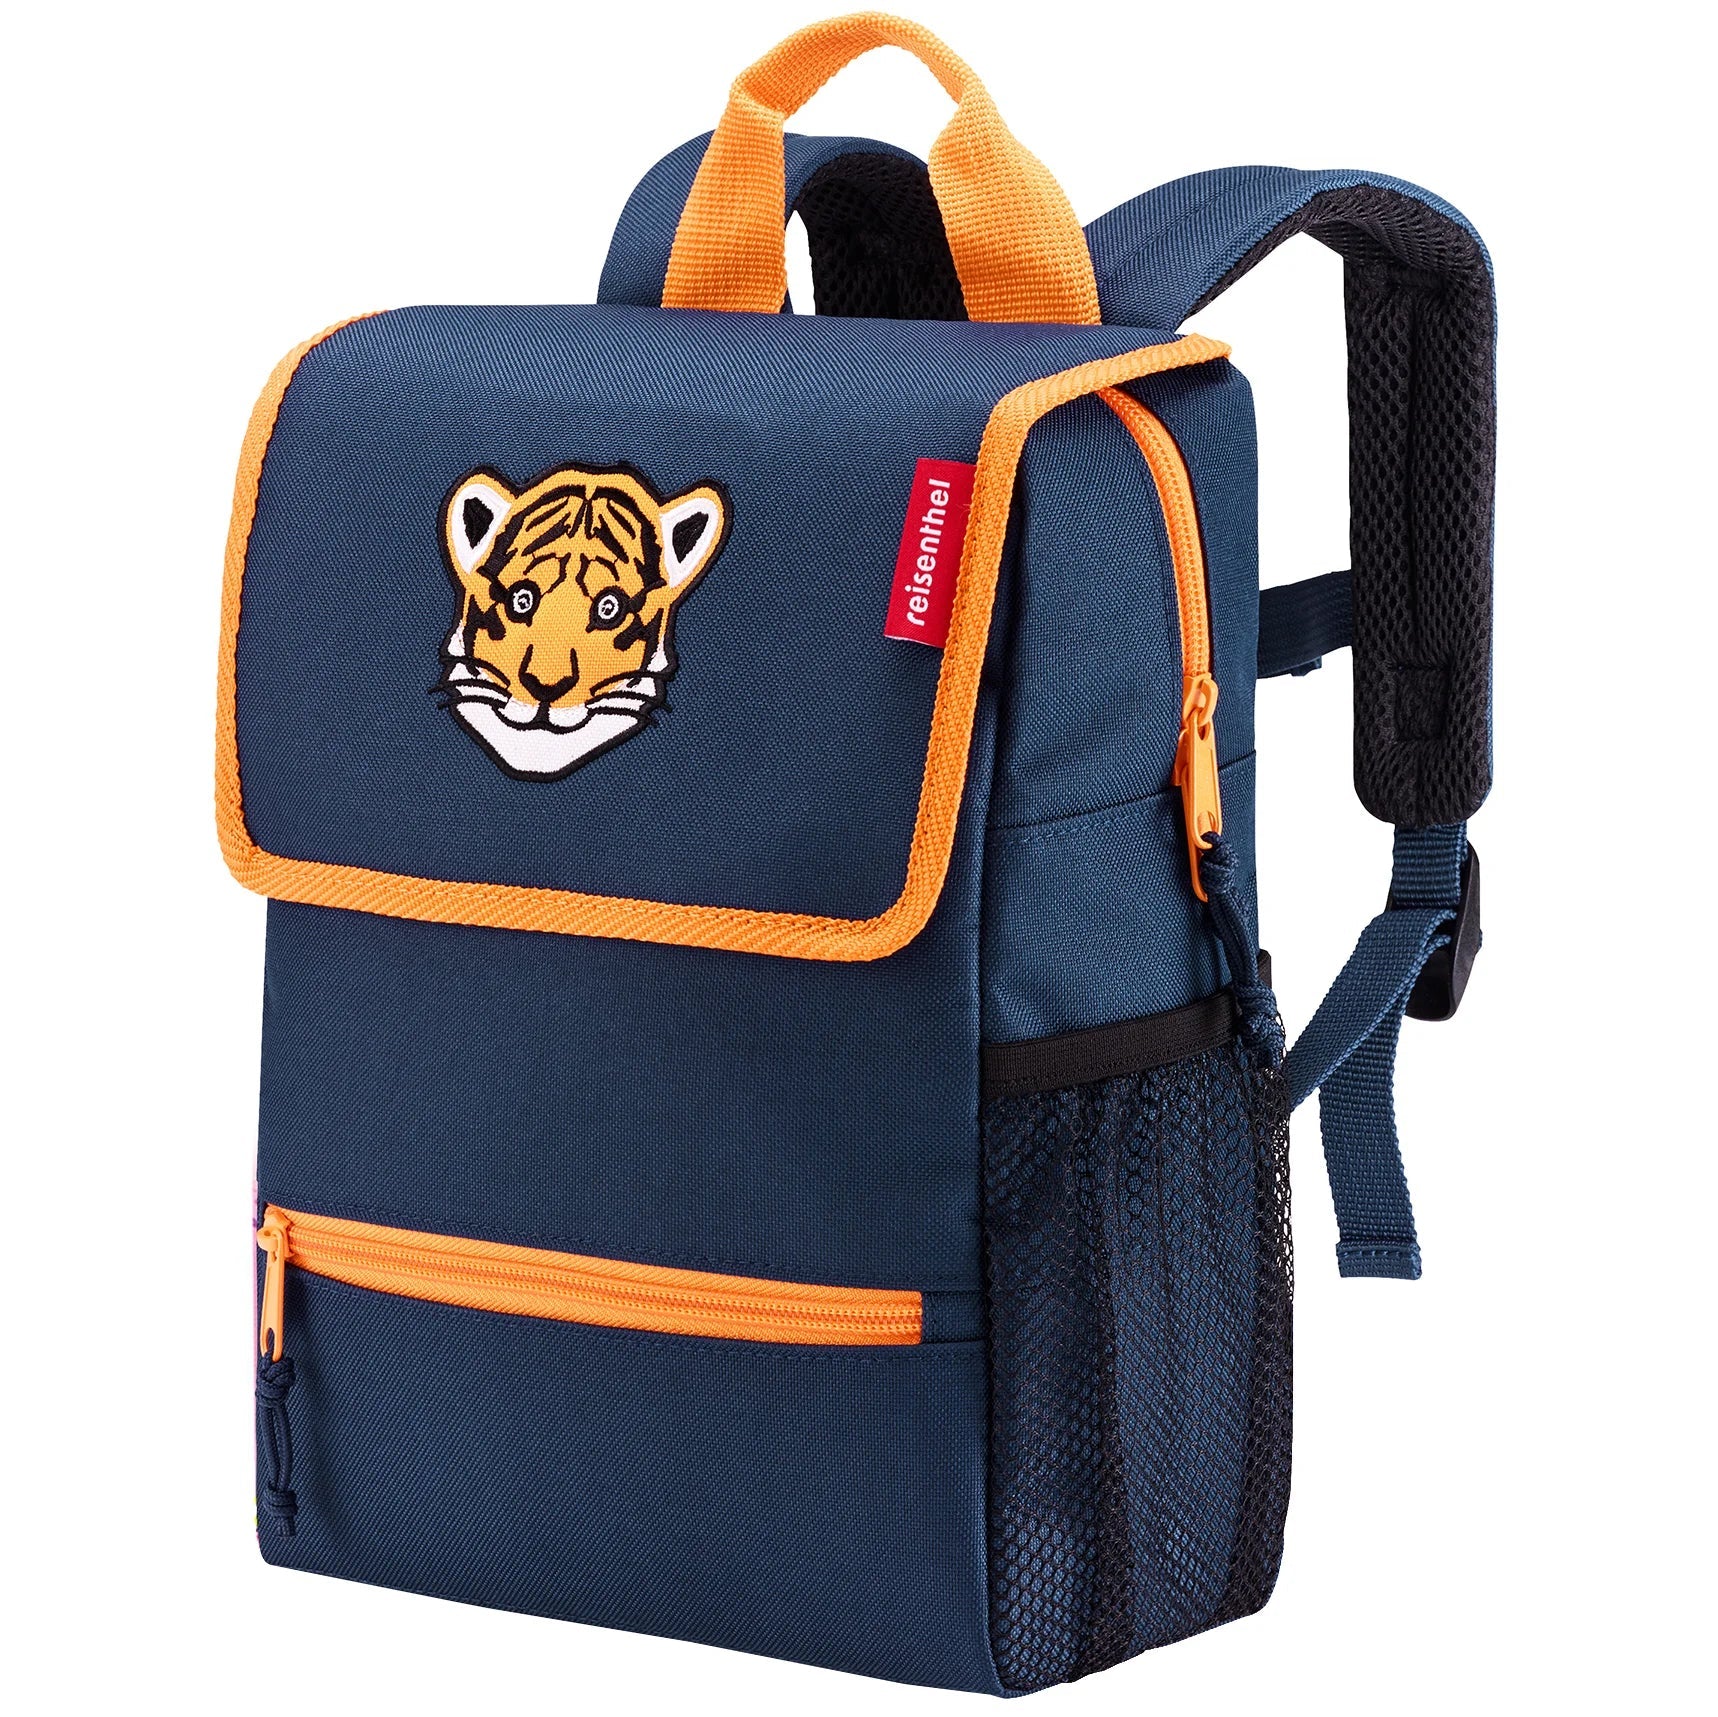 Reisenthel Kids Backpack Backpack 28 cm - tiger navy